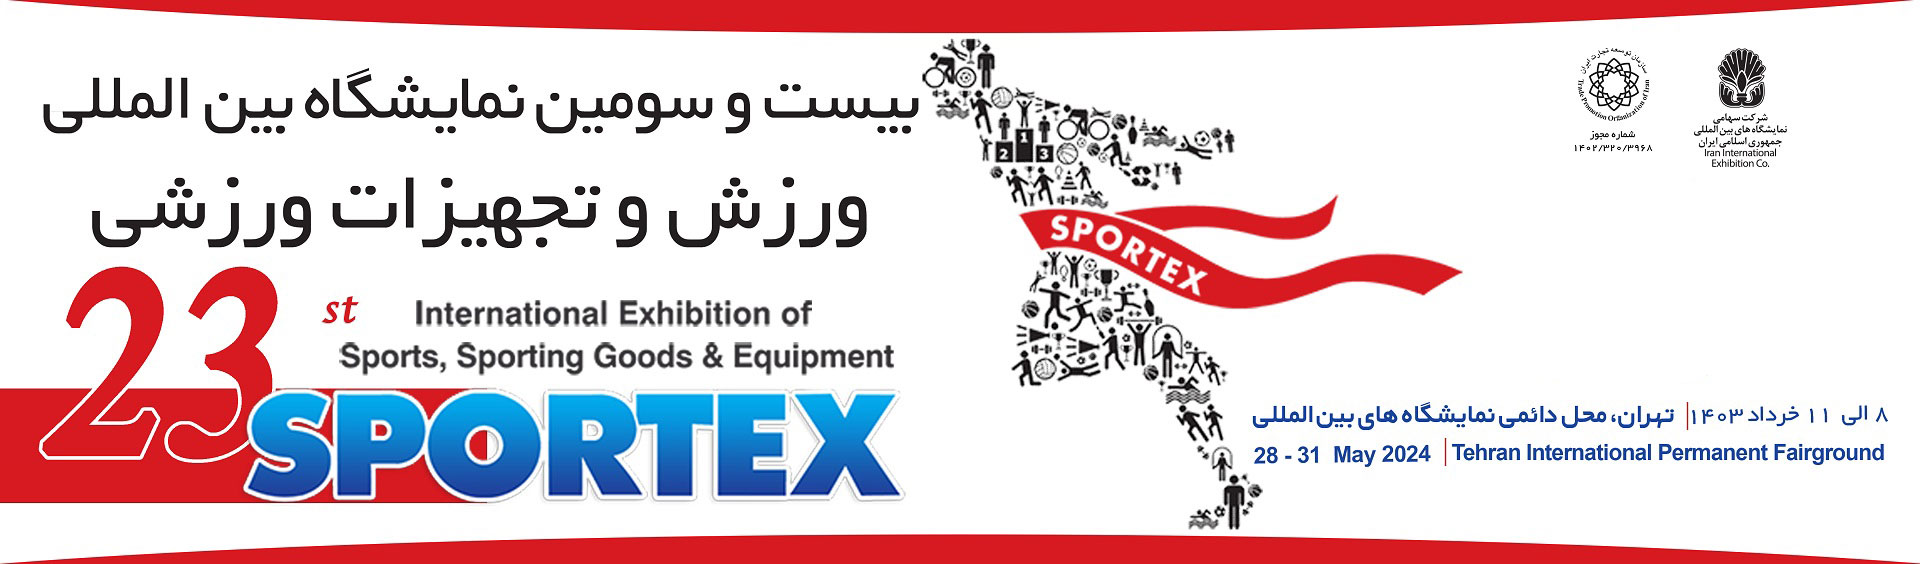 sportex2024 new poster 3 - The 23th International Sportex Exhibition 2024 in Iran/Tehran